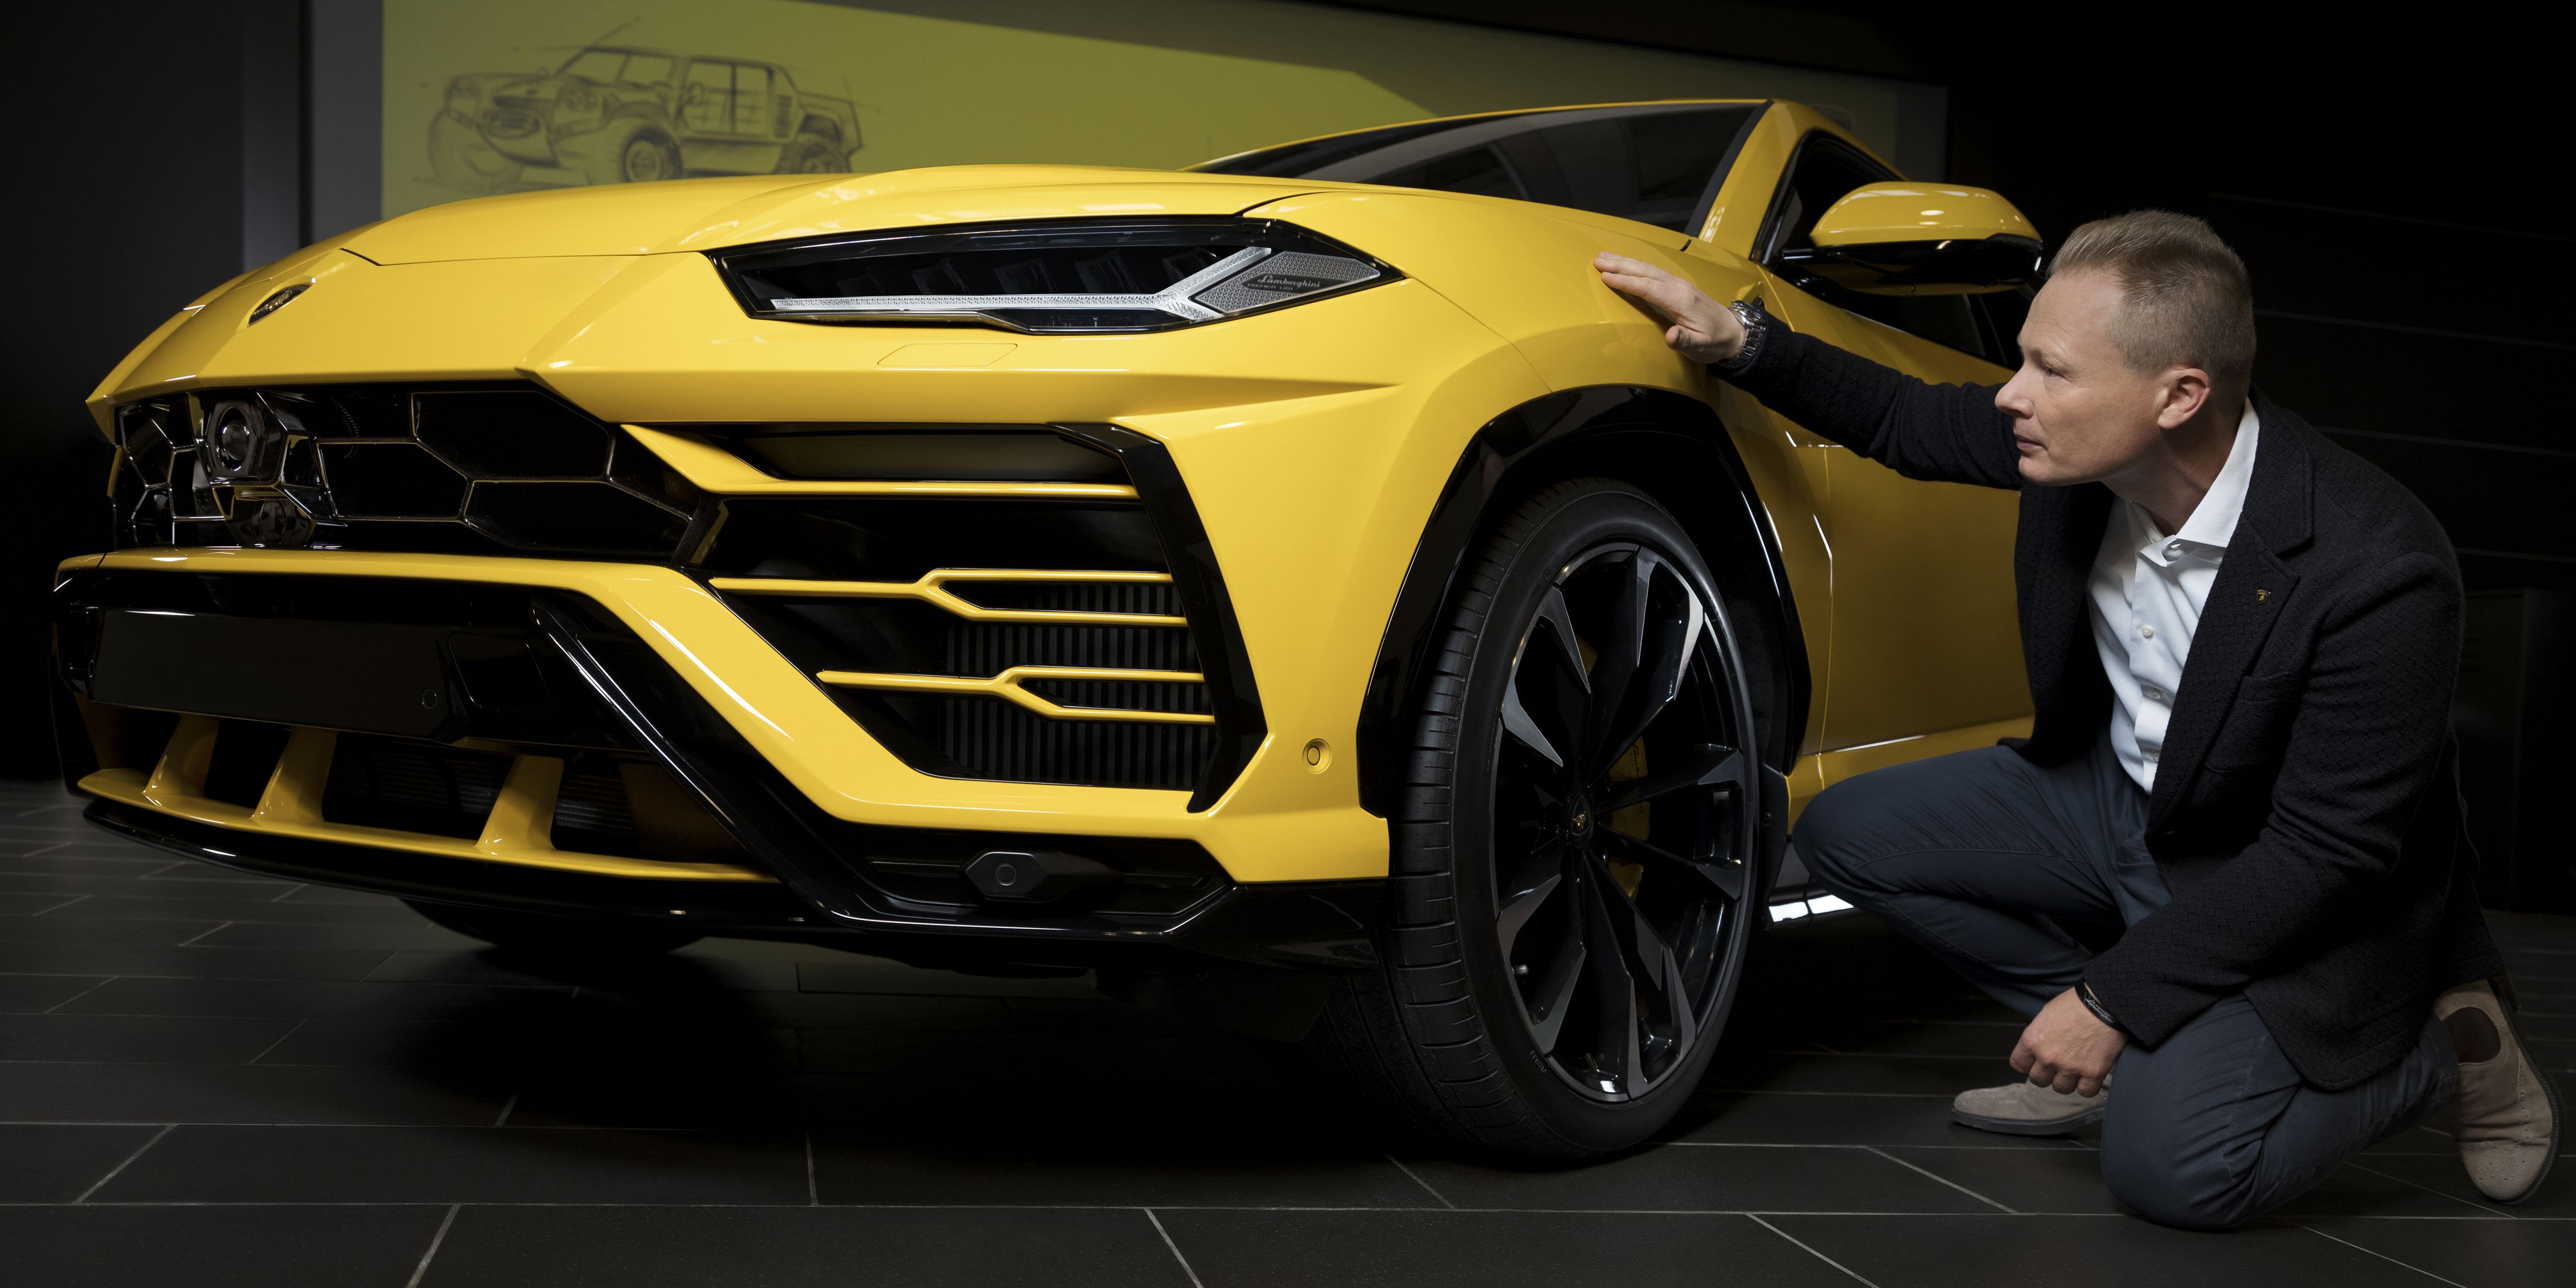 How to Make an SUV Look Like a Lamborghini